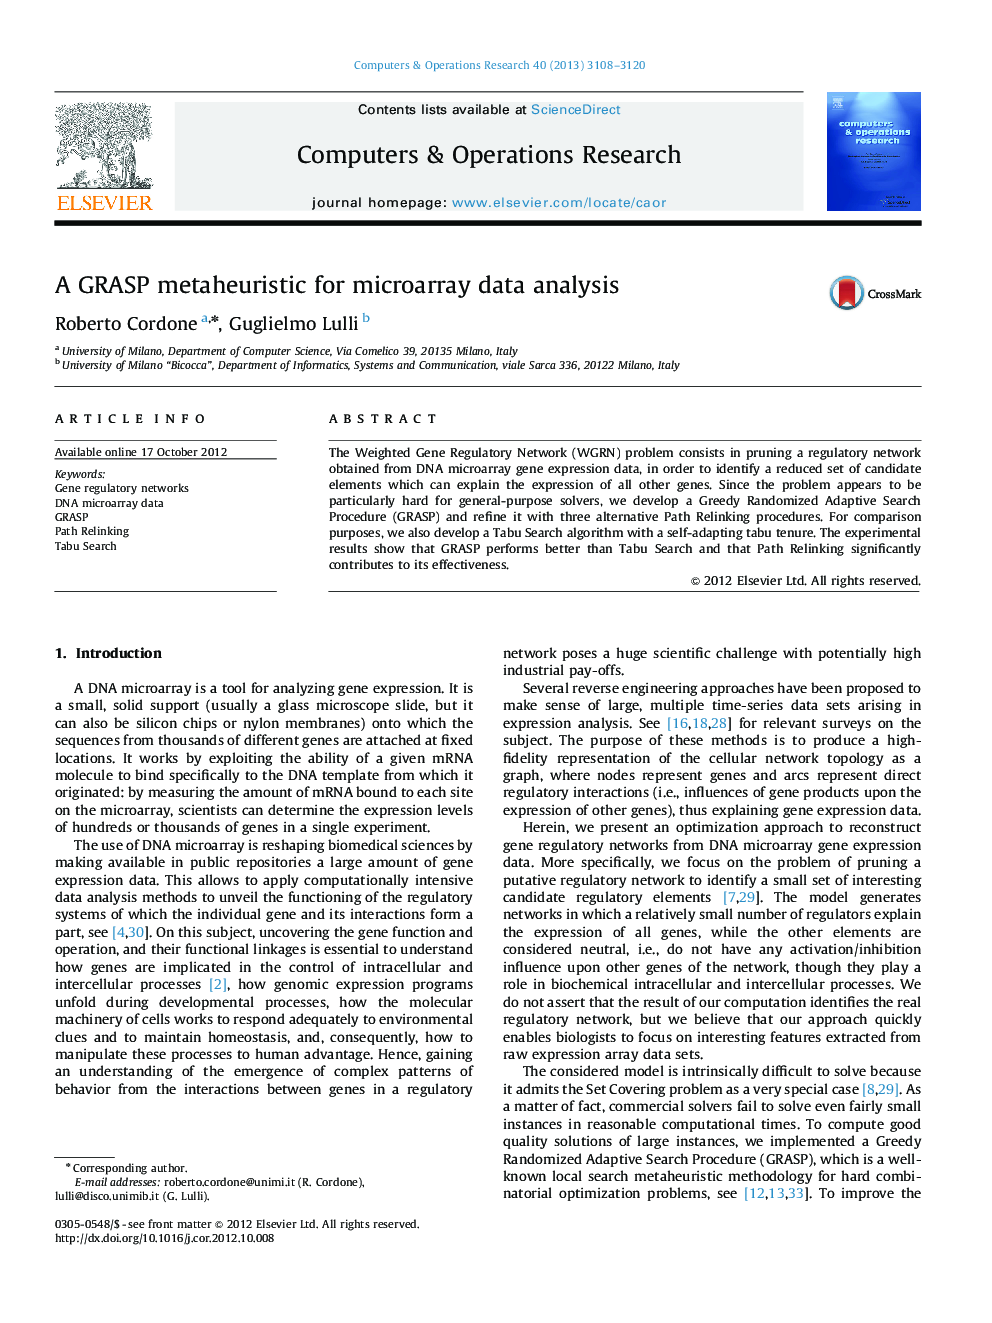 A GRASP metaheuristic for microarray data analysis